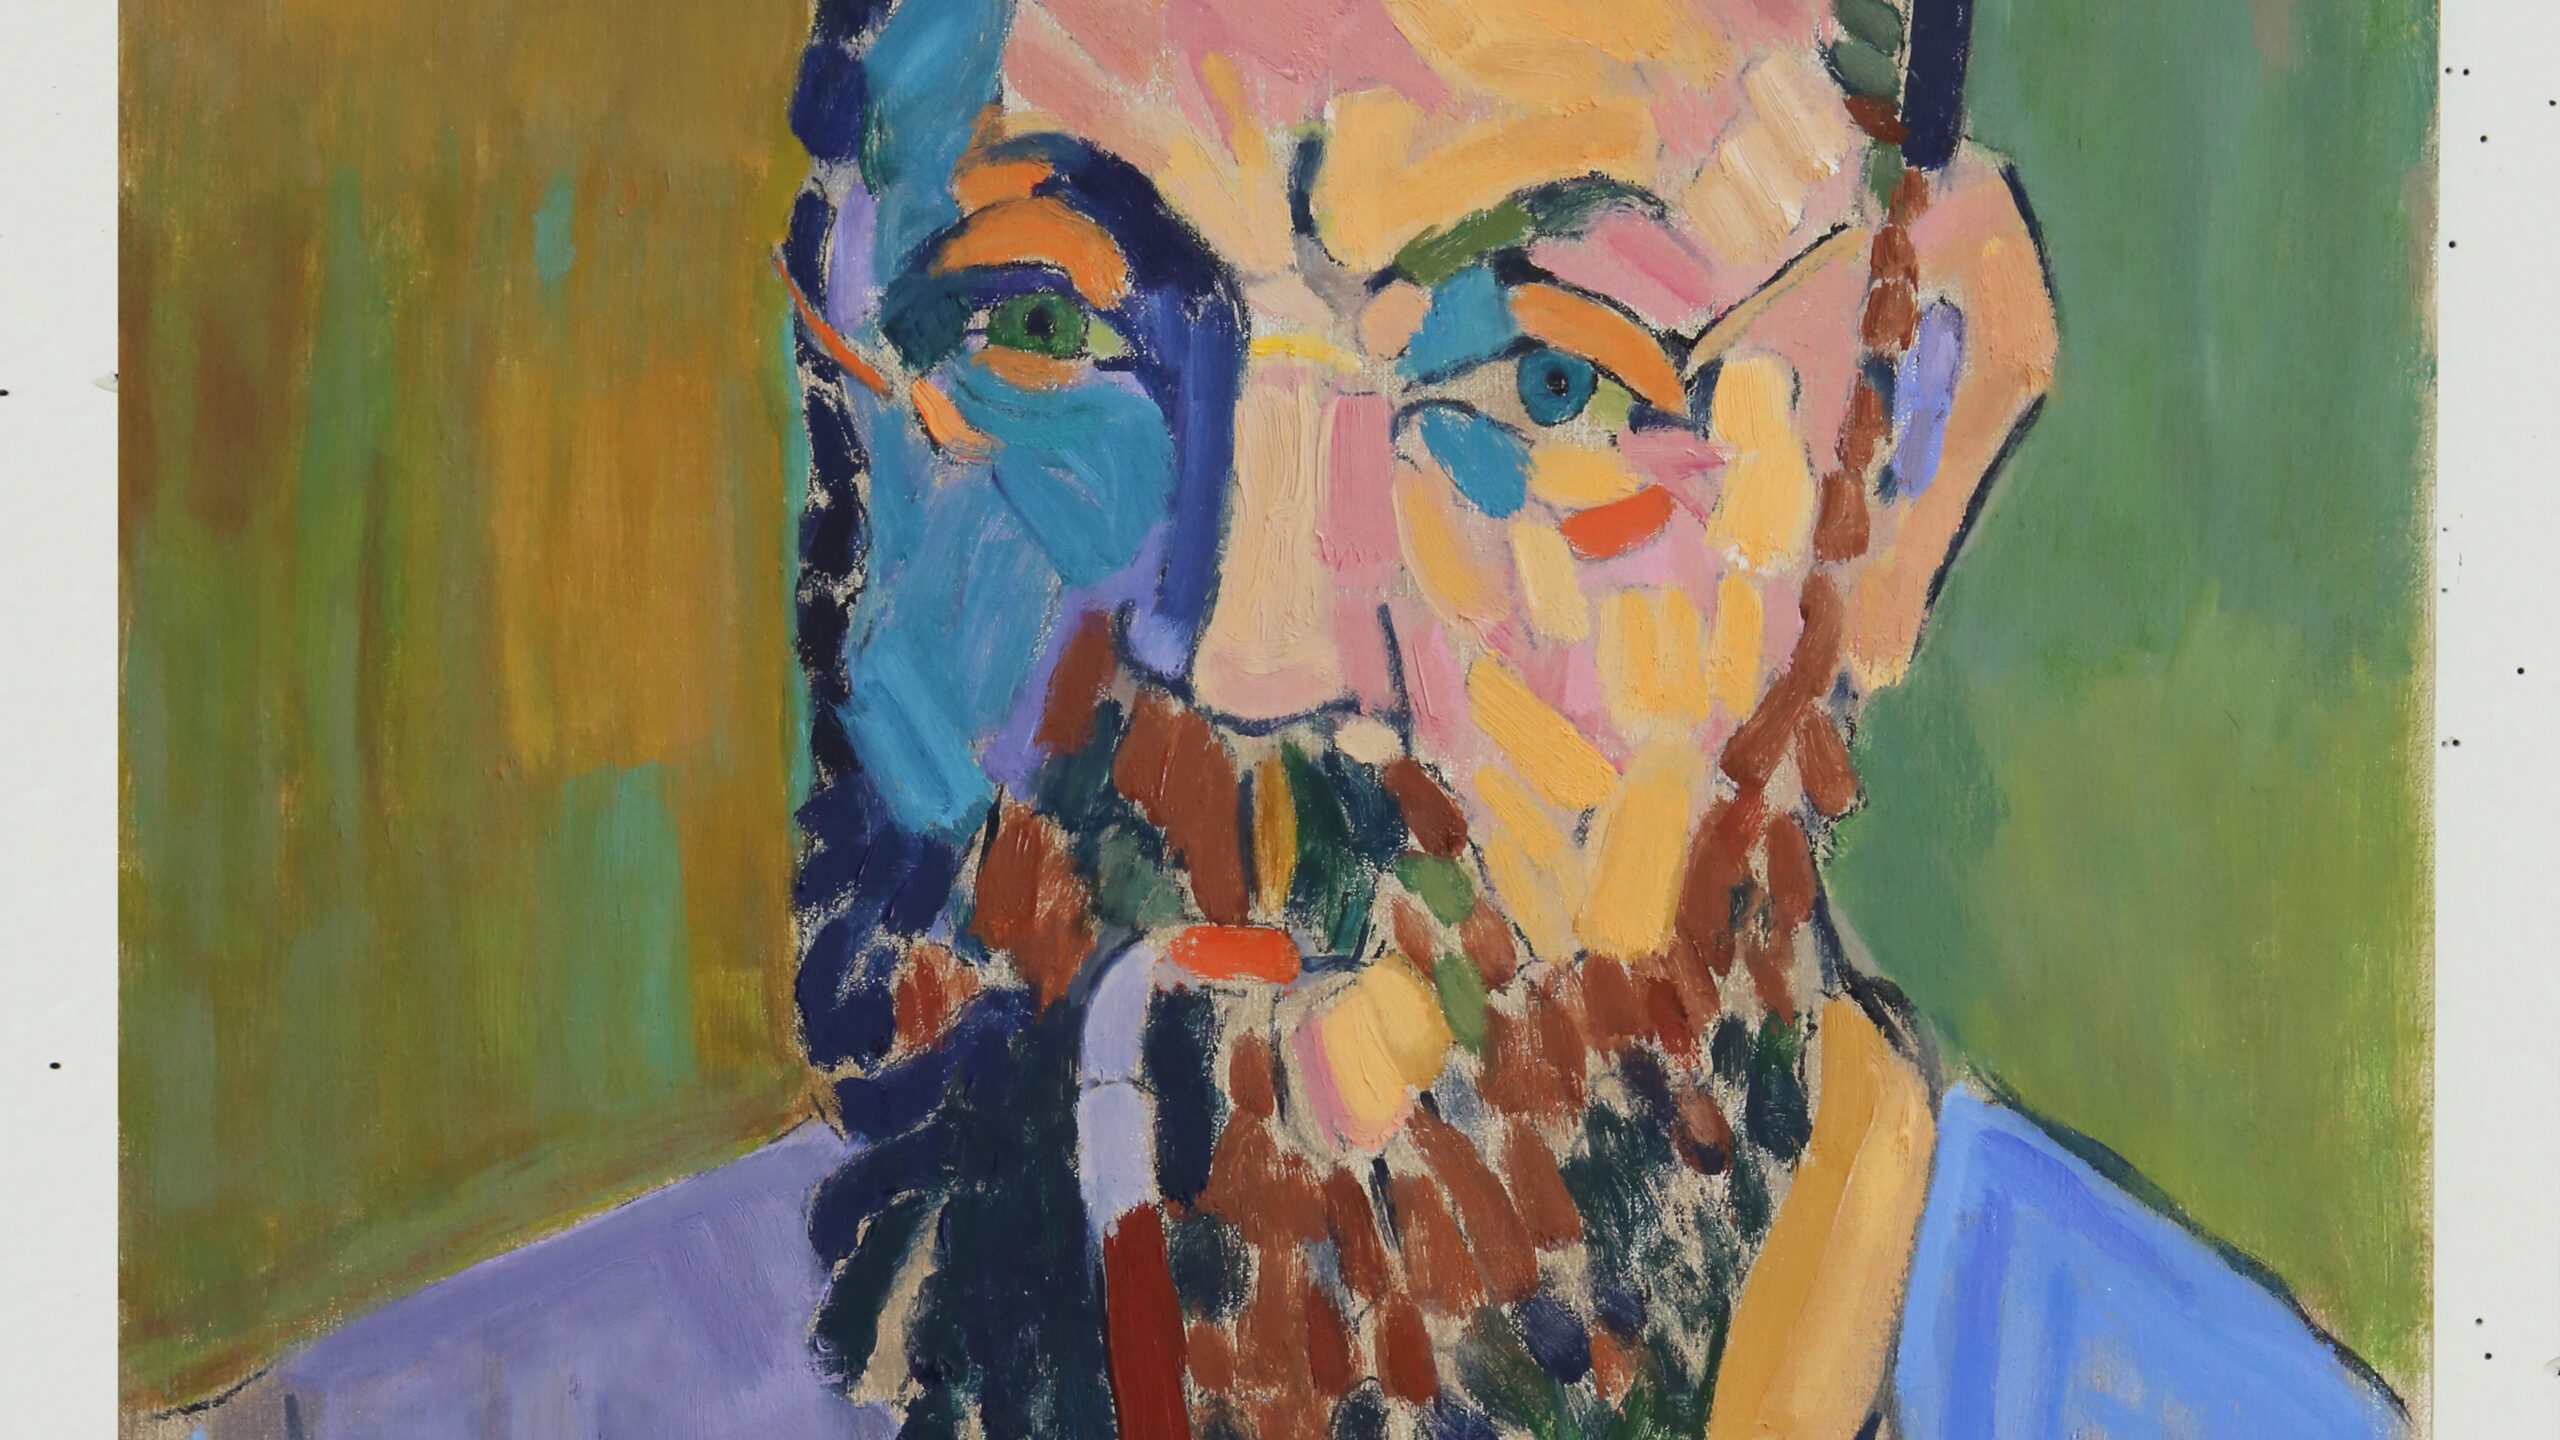 Episode 31: Project: Derain’s Portrait of Matisse